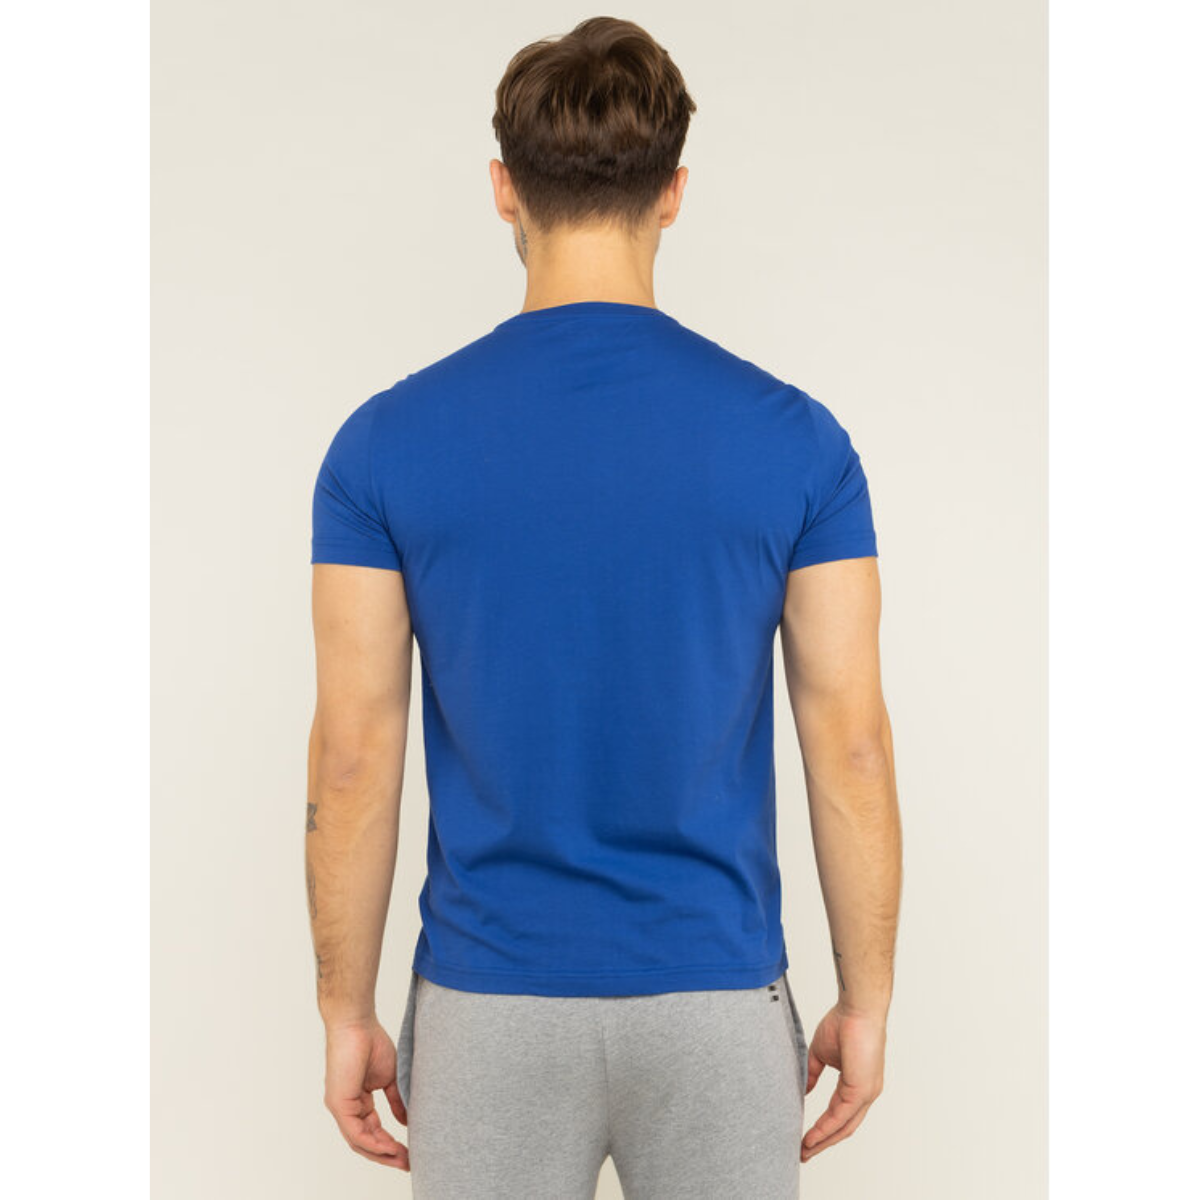 EA7 Emporio Armani - T-Shirt - Blue